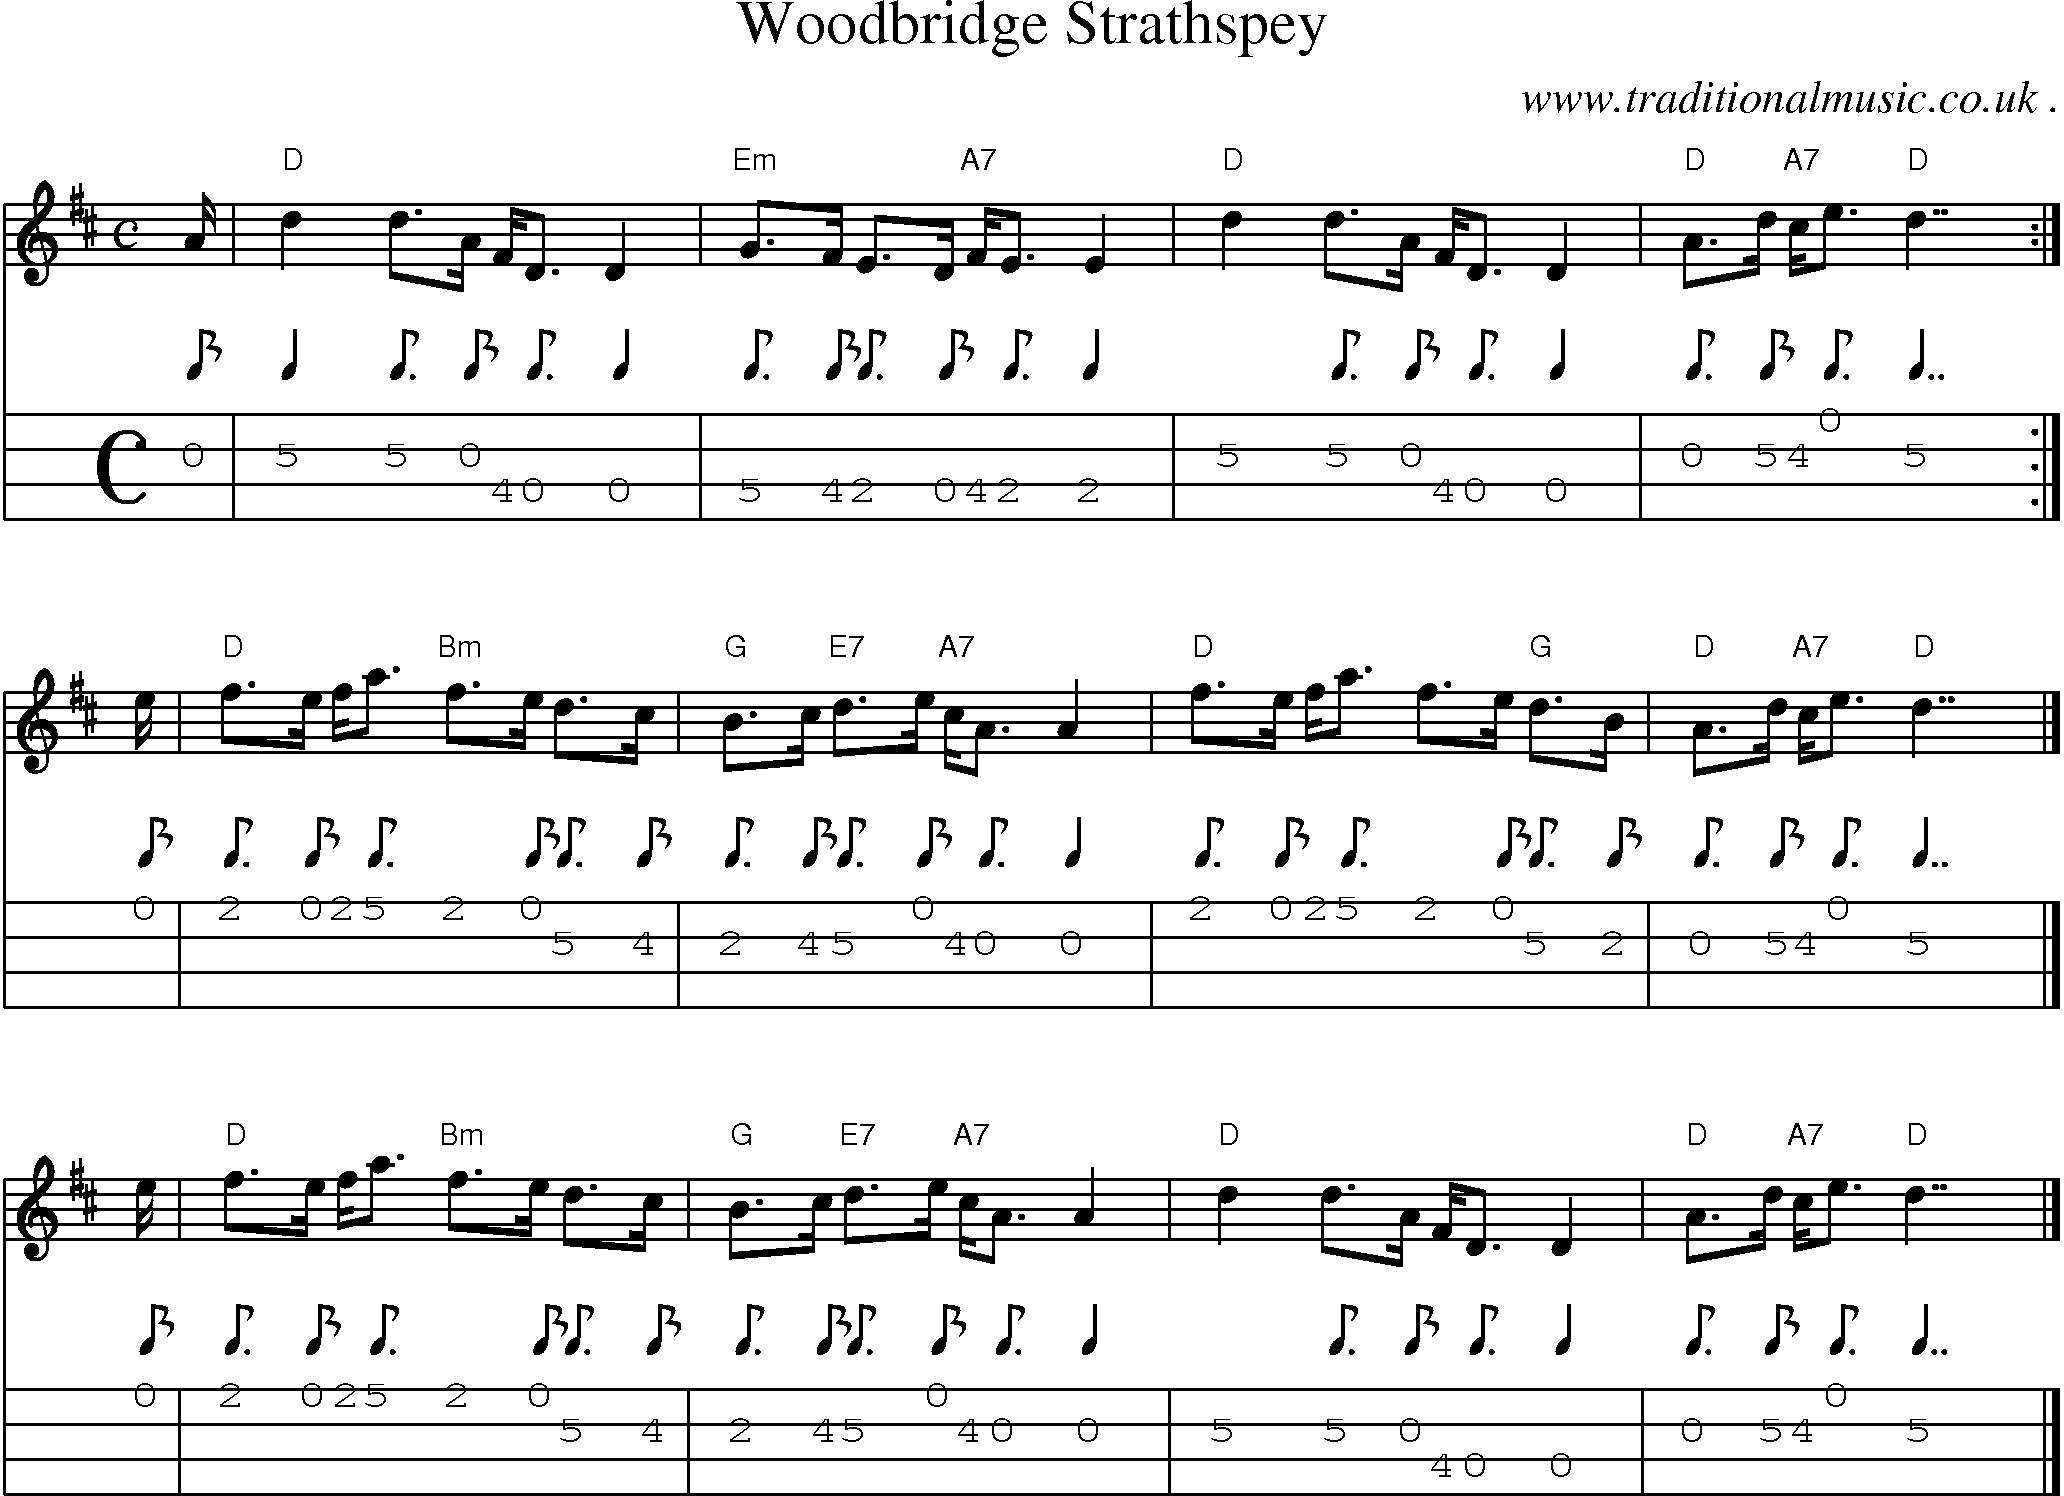 Sheet-music  score, Chords and Mandolin Tabs for Woodbridge Strathspey